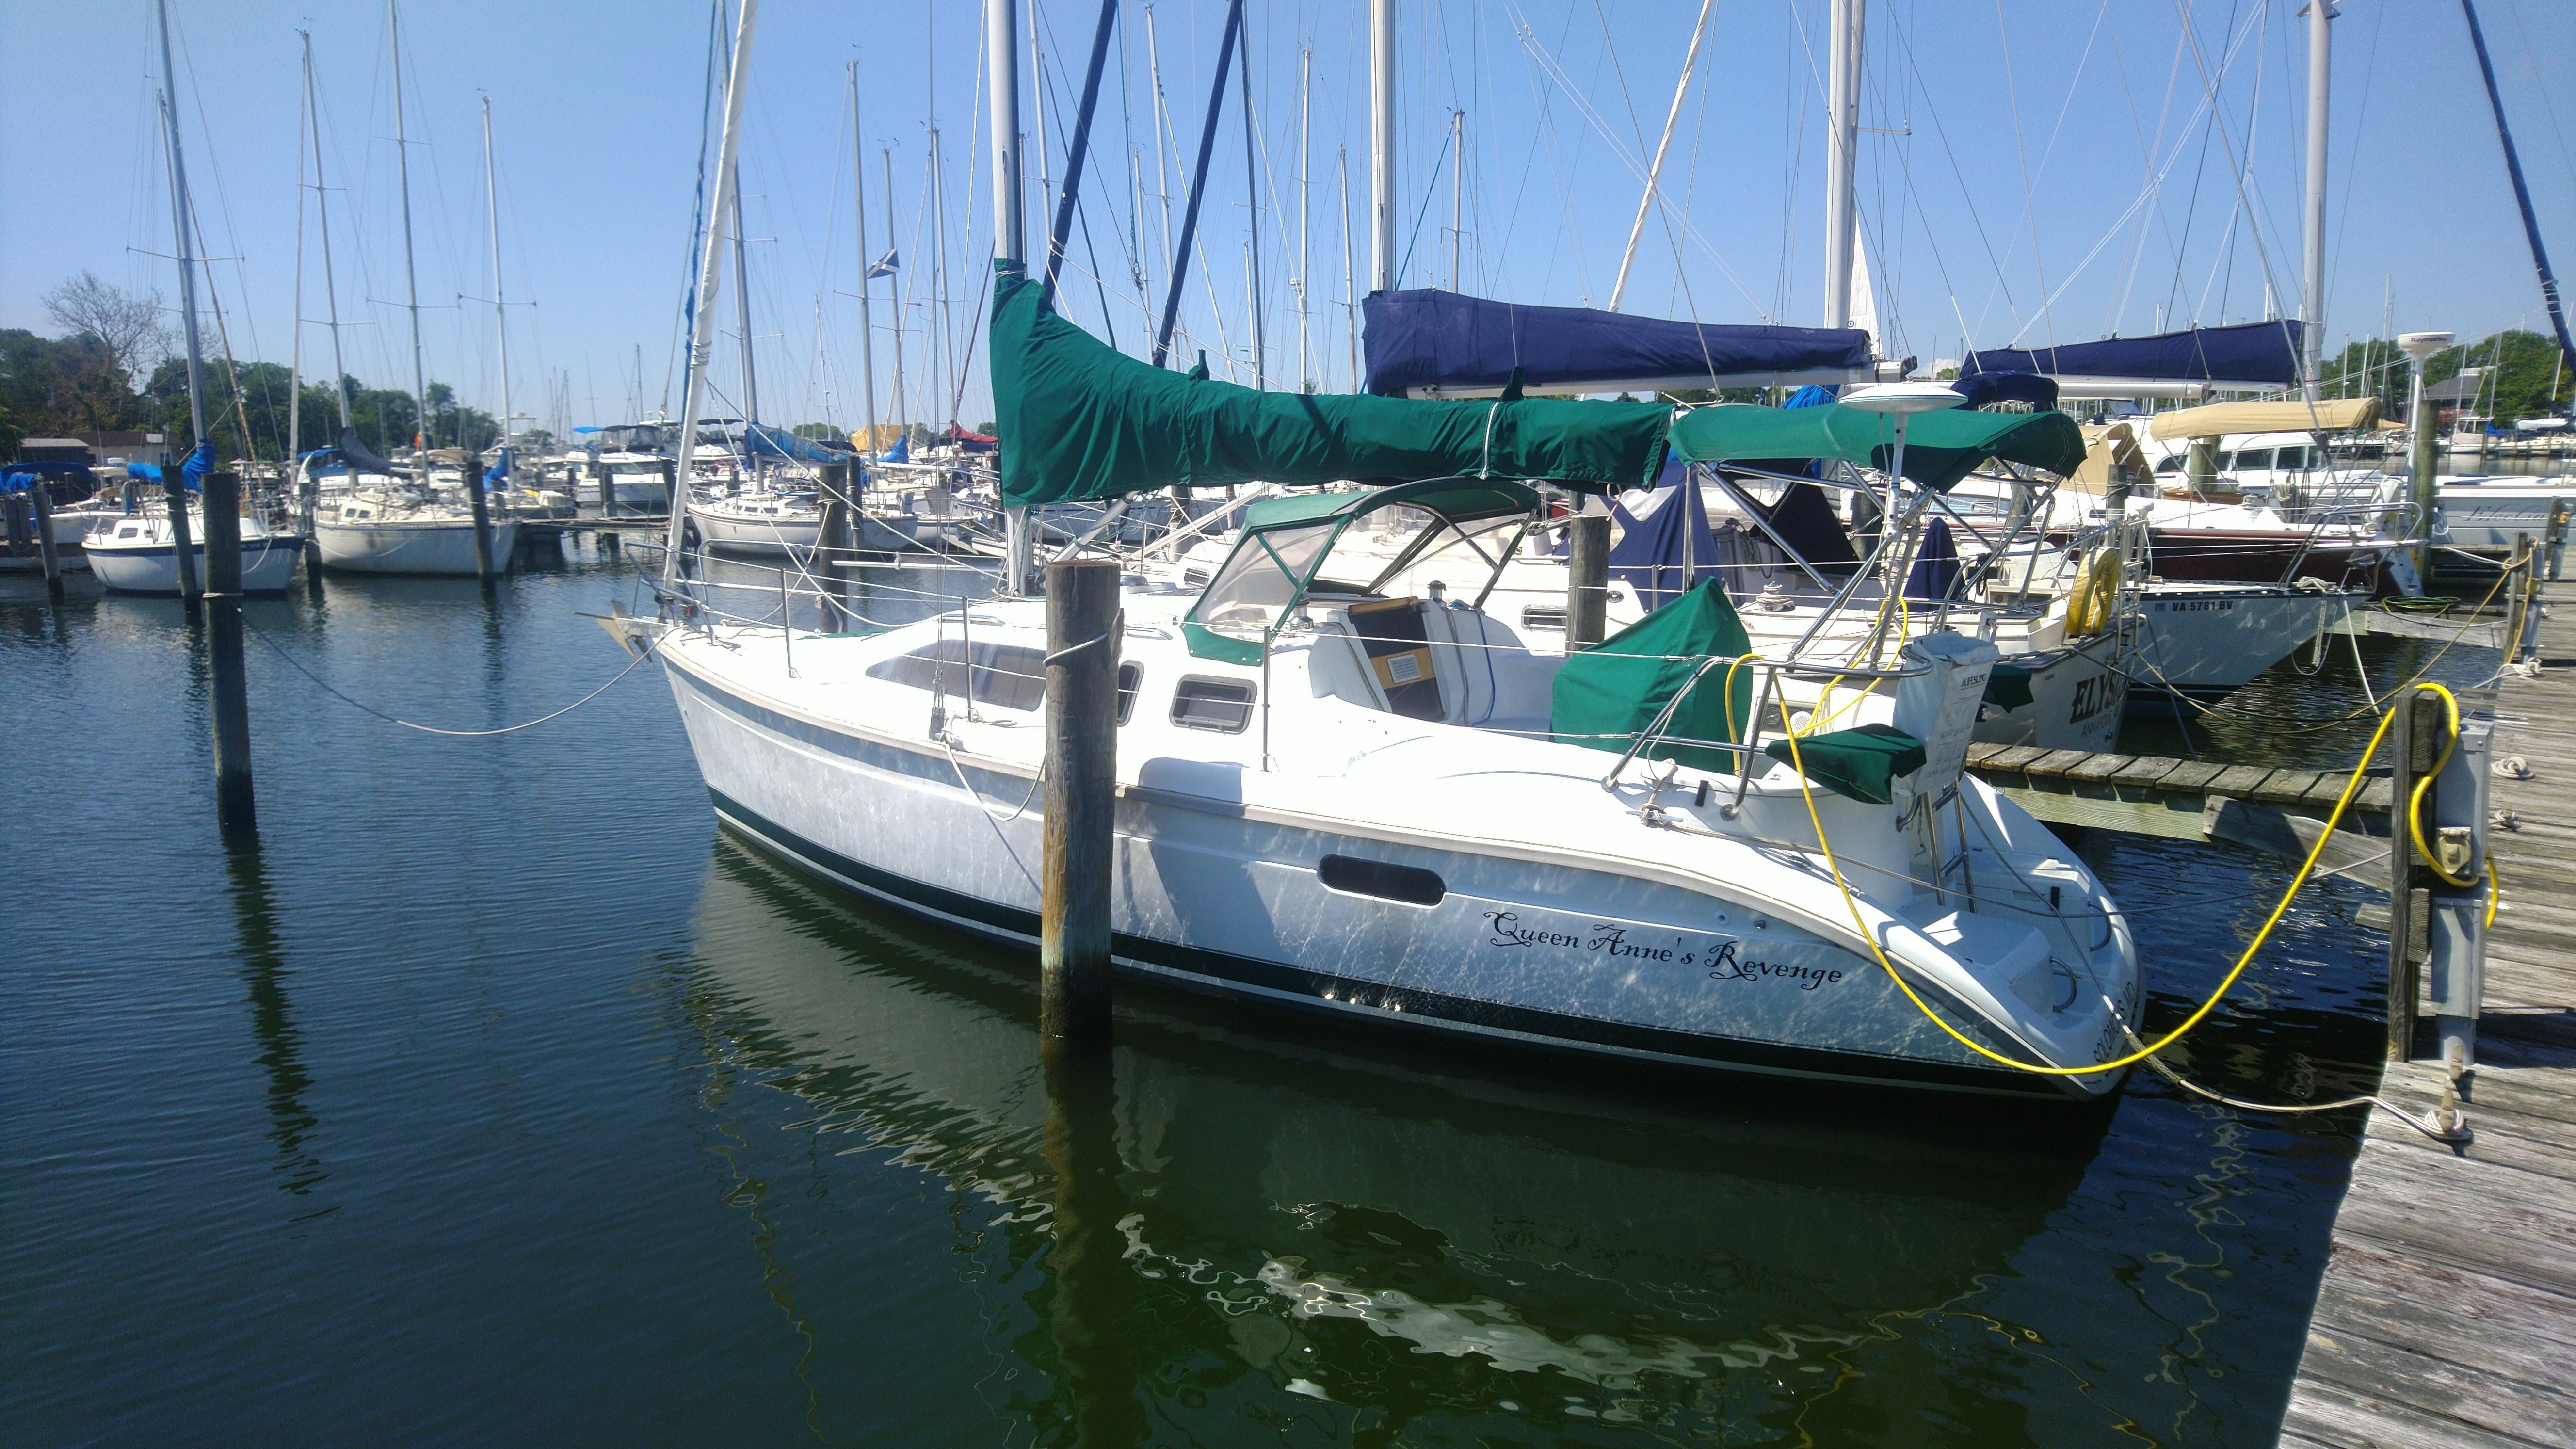 29.5 hunter sailboat for sale